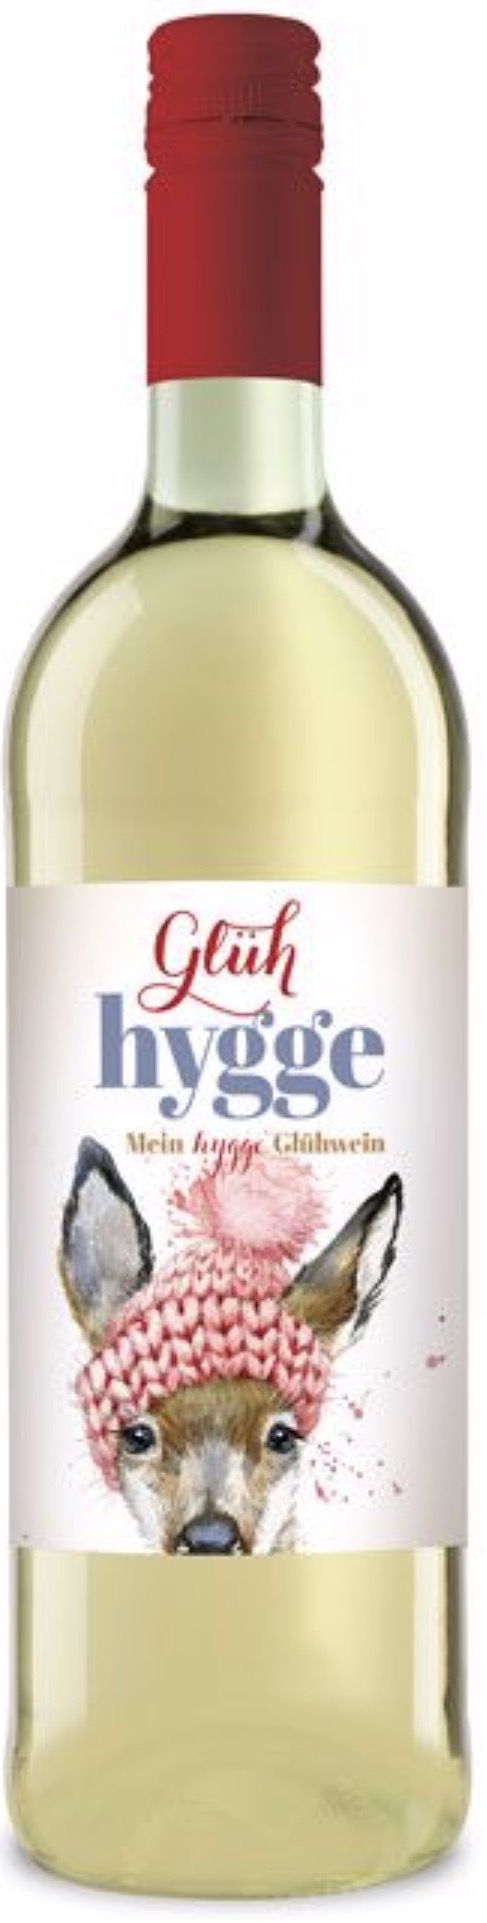 Glüh Hygge Weiss 11% vol 0,75L